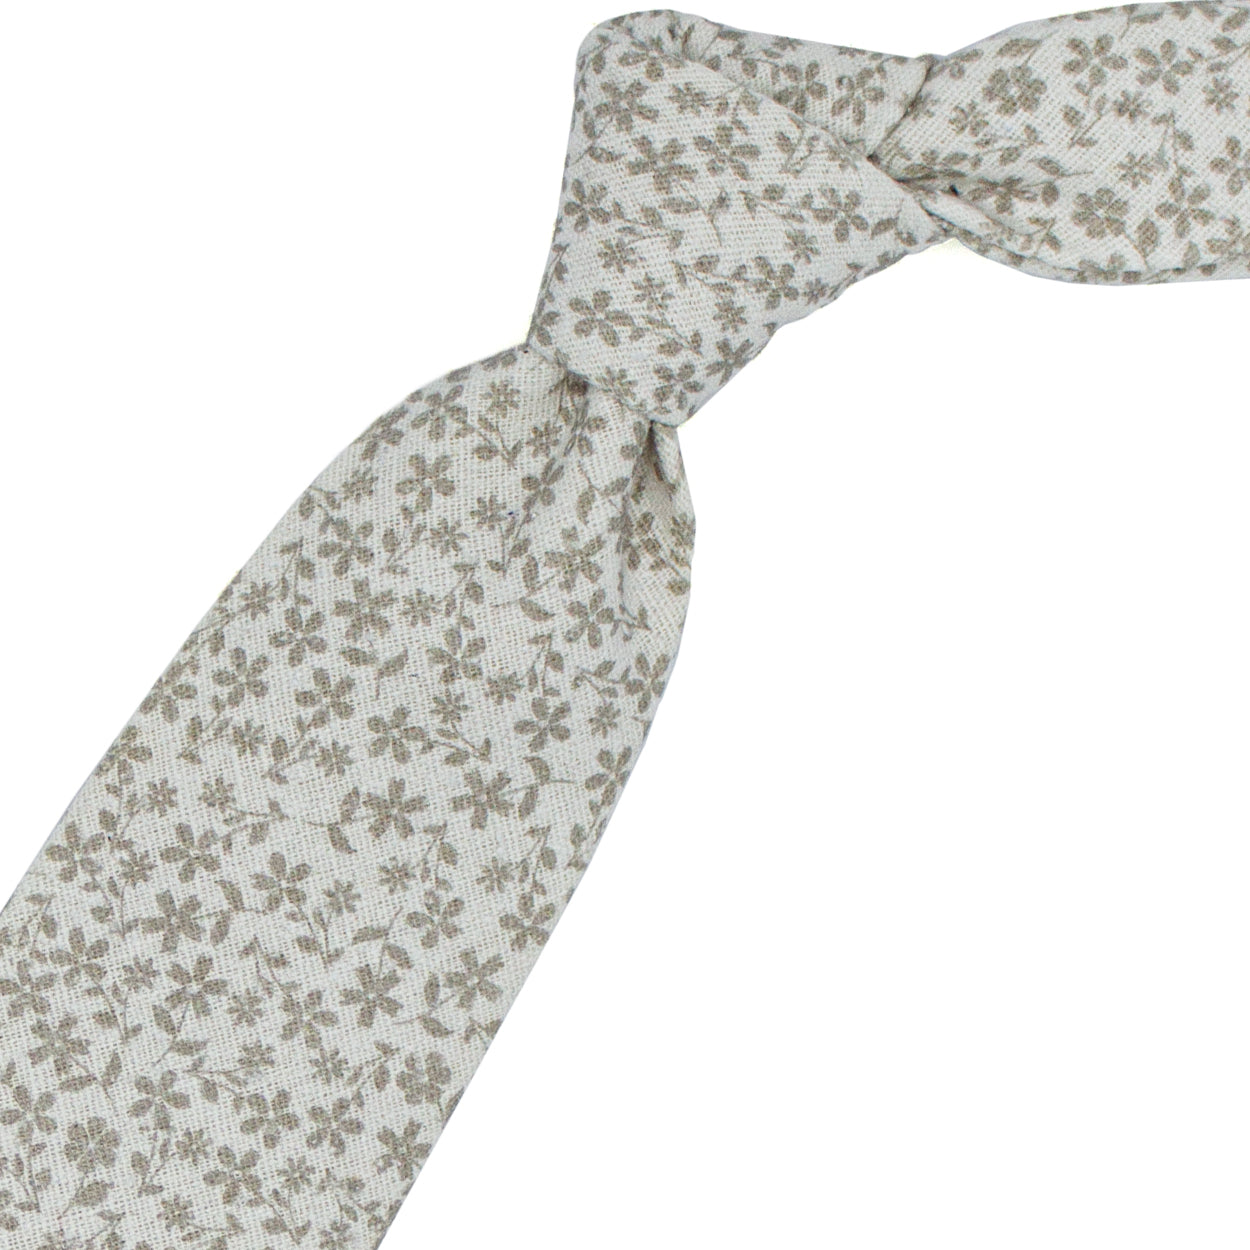 White tie with beige flowers